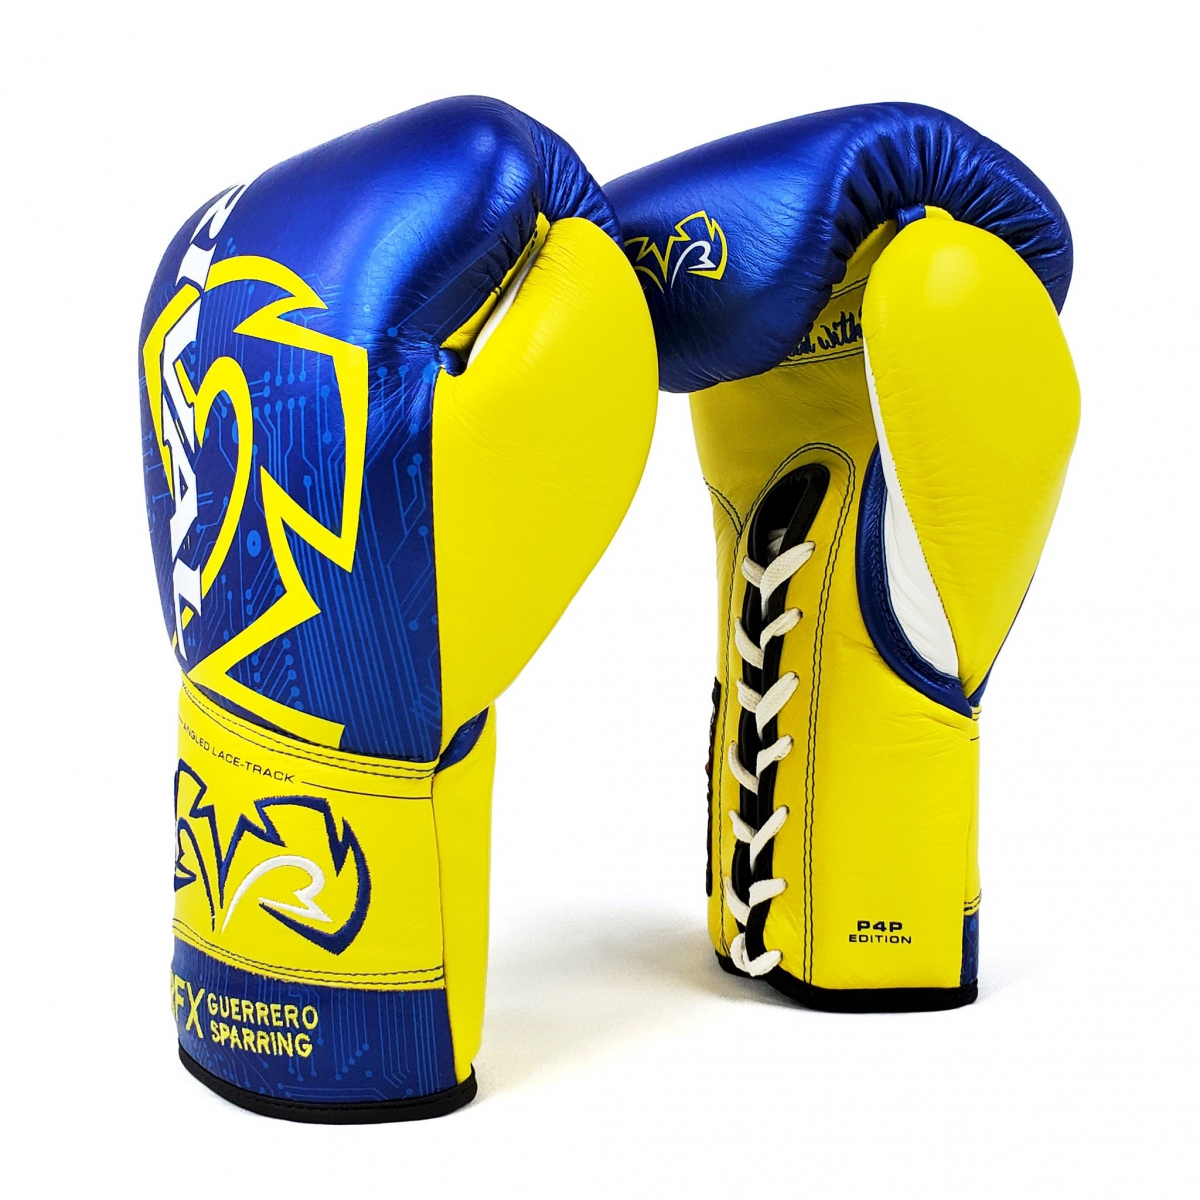 Боксерские перчатки Rival RFX Guerrero Sparring Gloves P4P Edition Blue Yellow